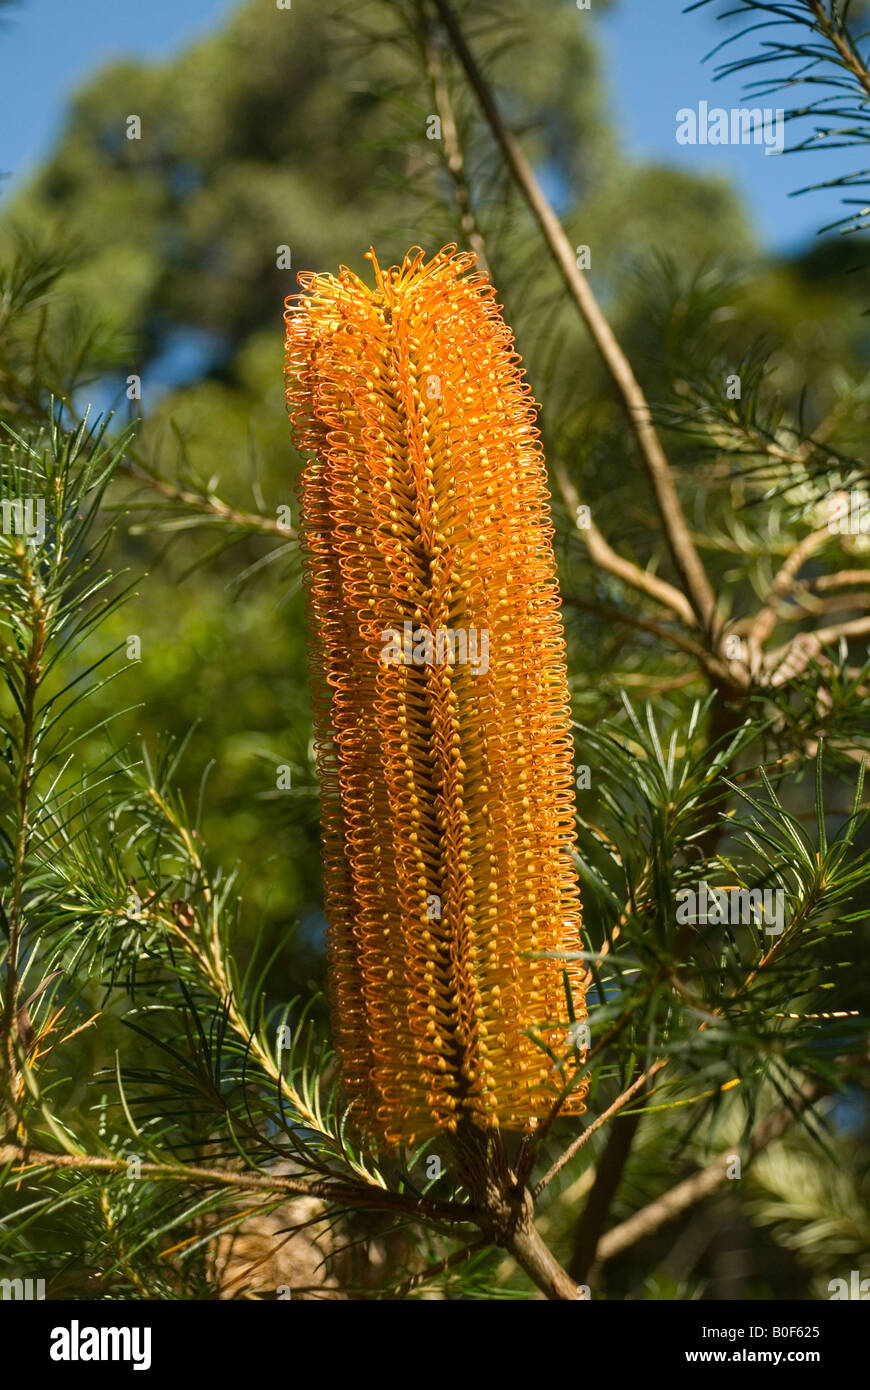 Banksia australien Golden Candle flower Banque D'Images